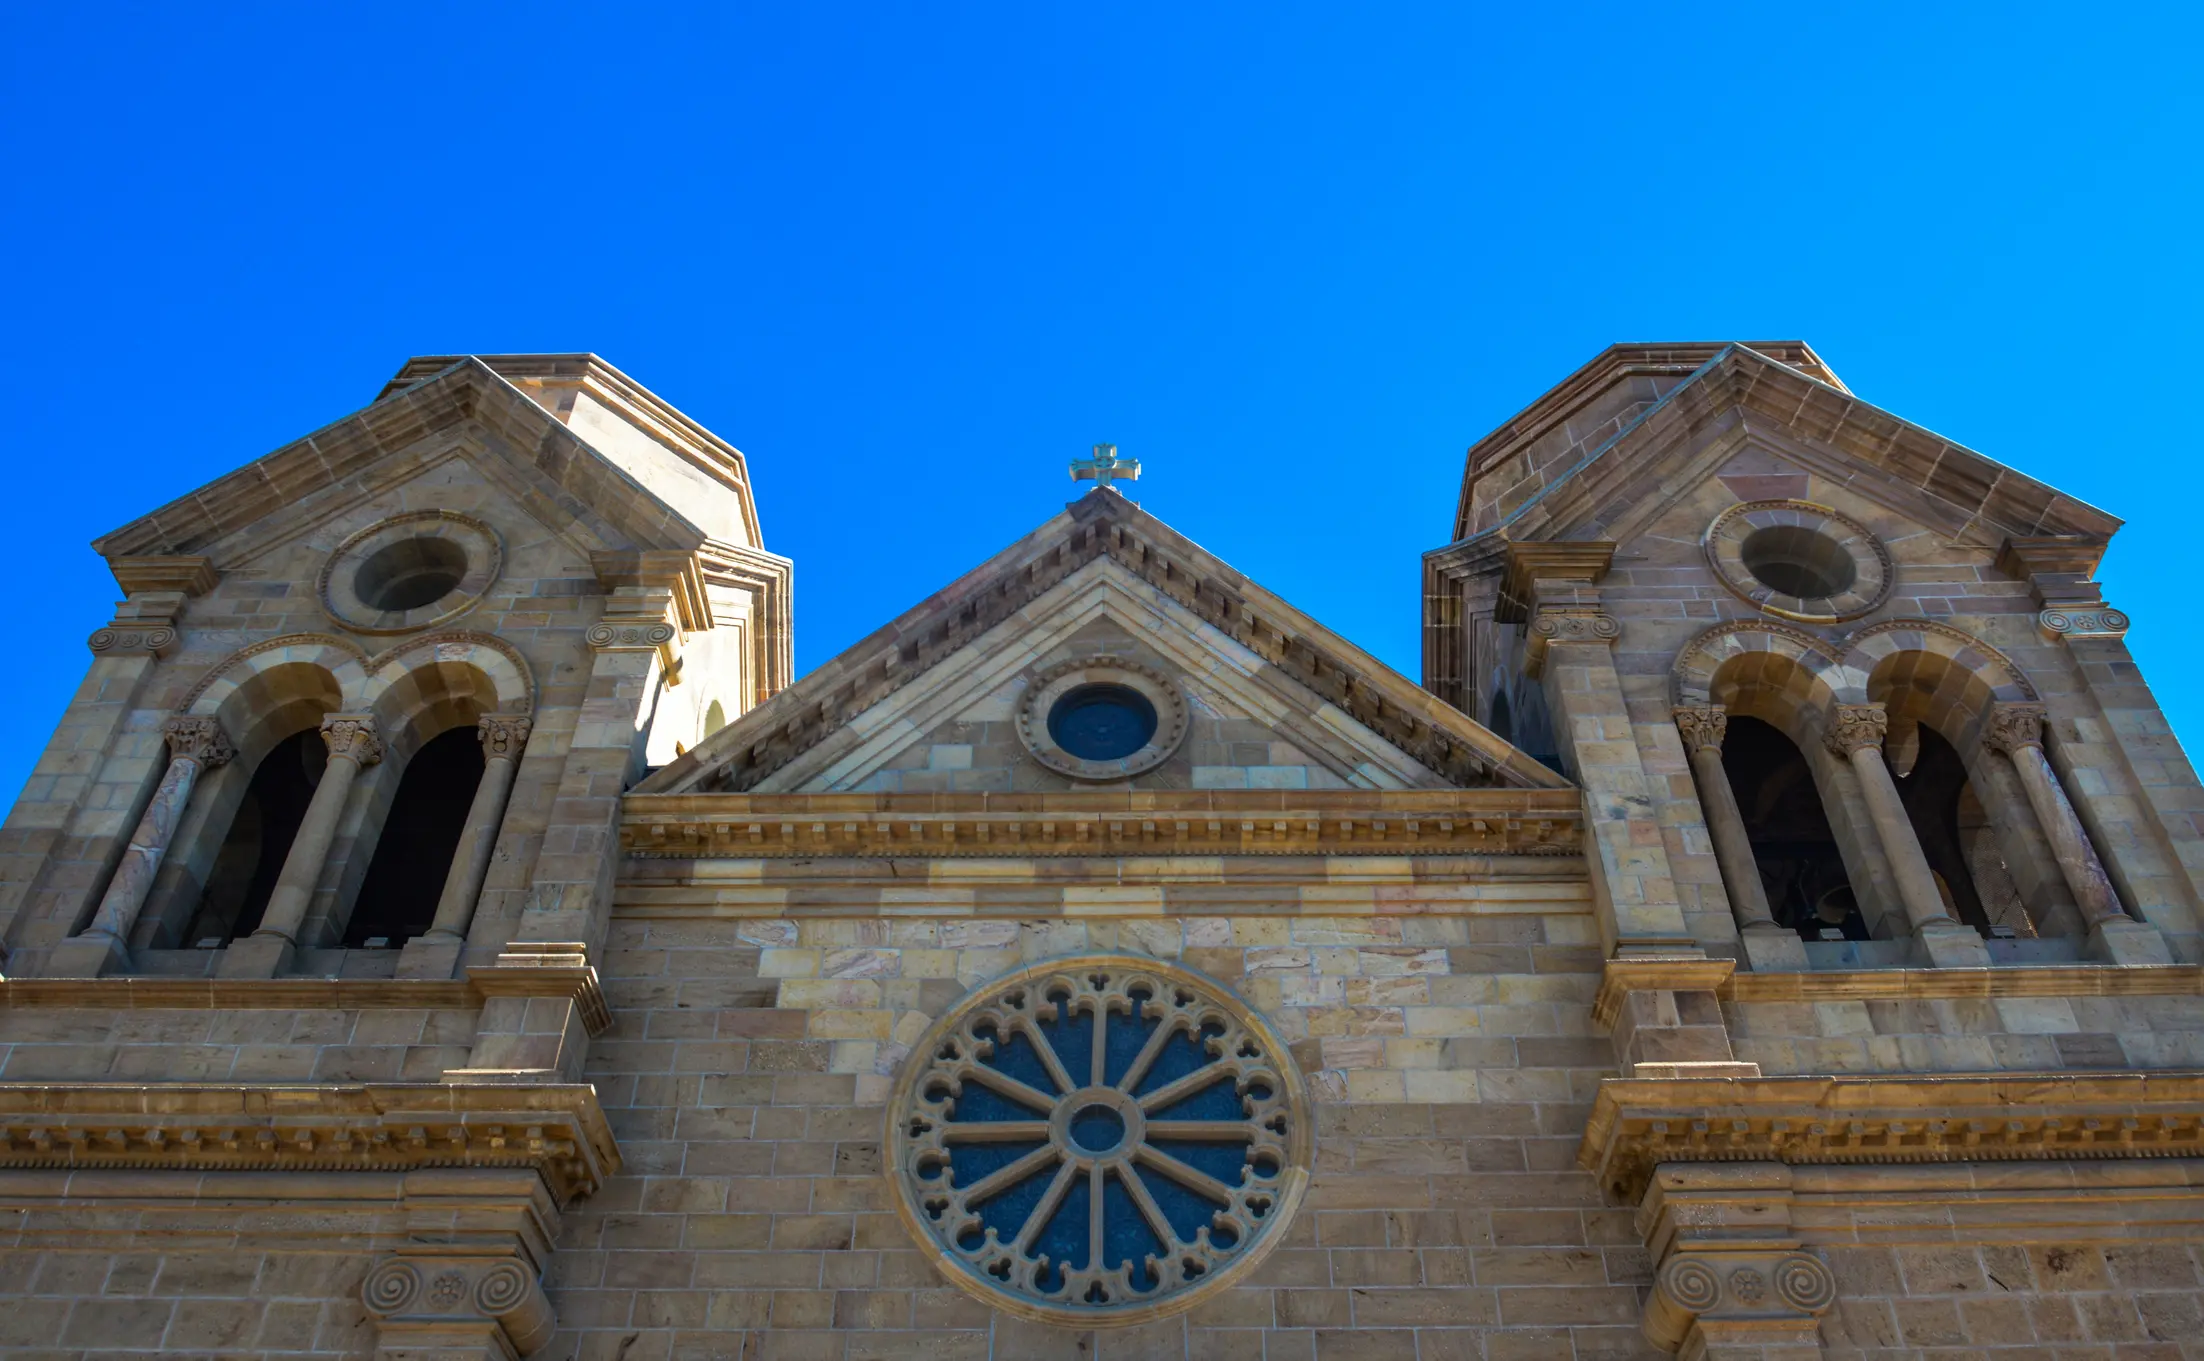 Santa Fe, New Mexico - St. Francis Cathedral Exterior